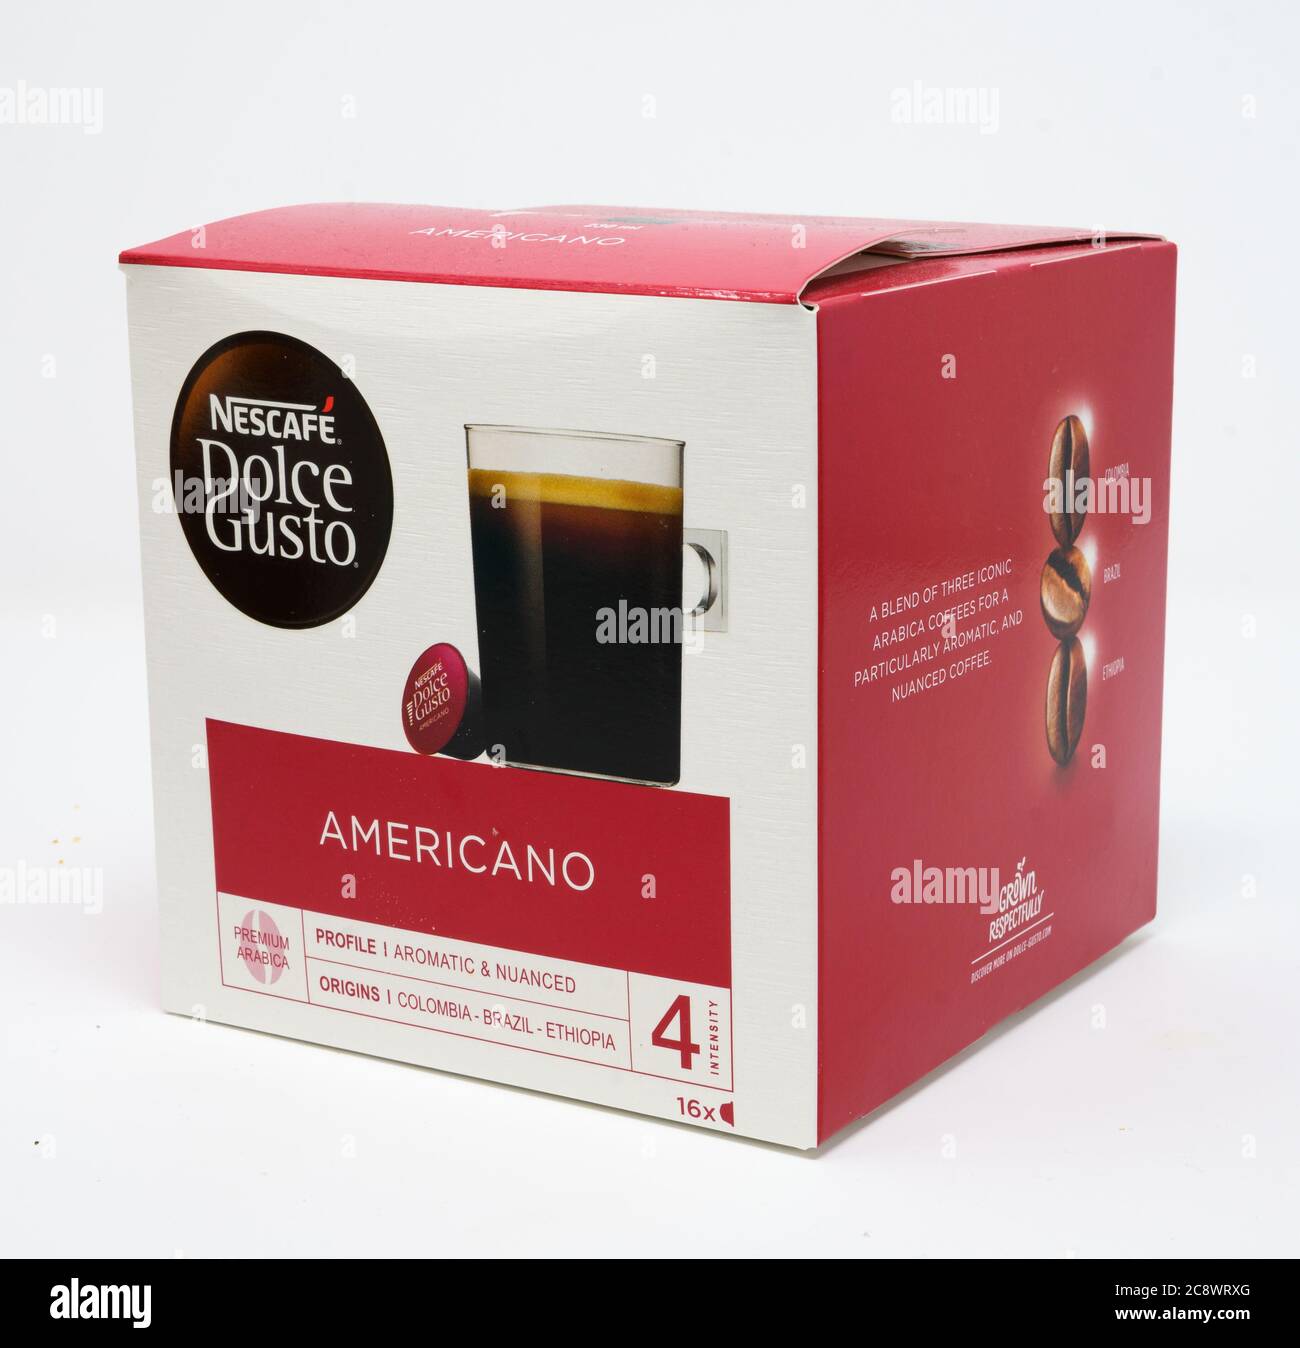  Nescafe Dolce Gusto Chococino 8 per pack - Pack de 2